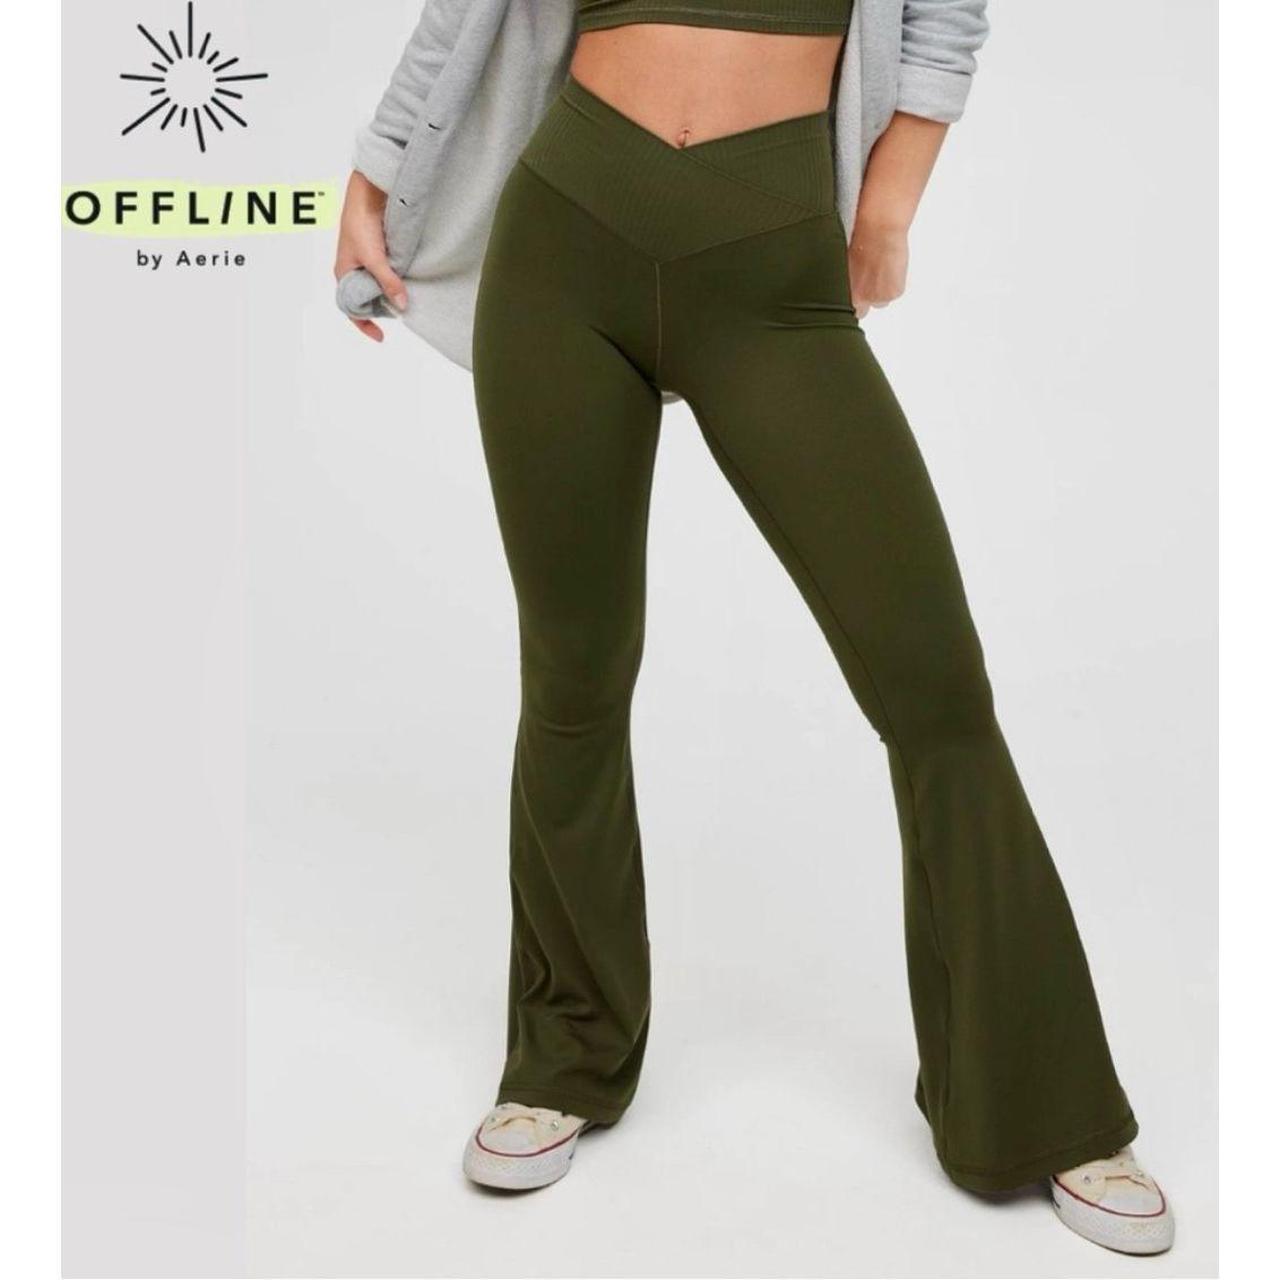 Aerie offline crossover leggings, super soft and - Depop